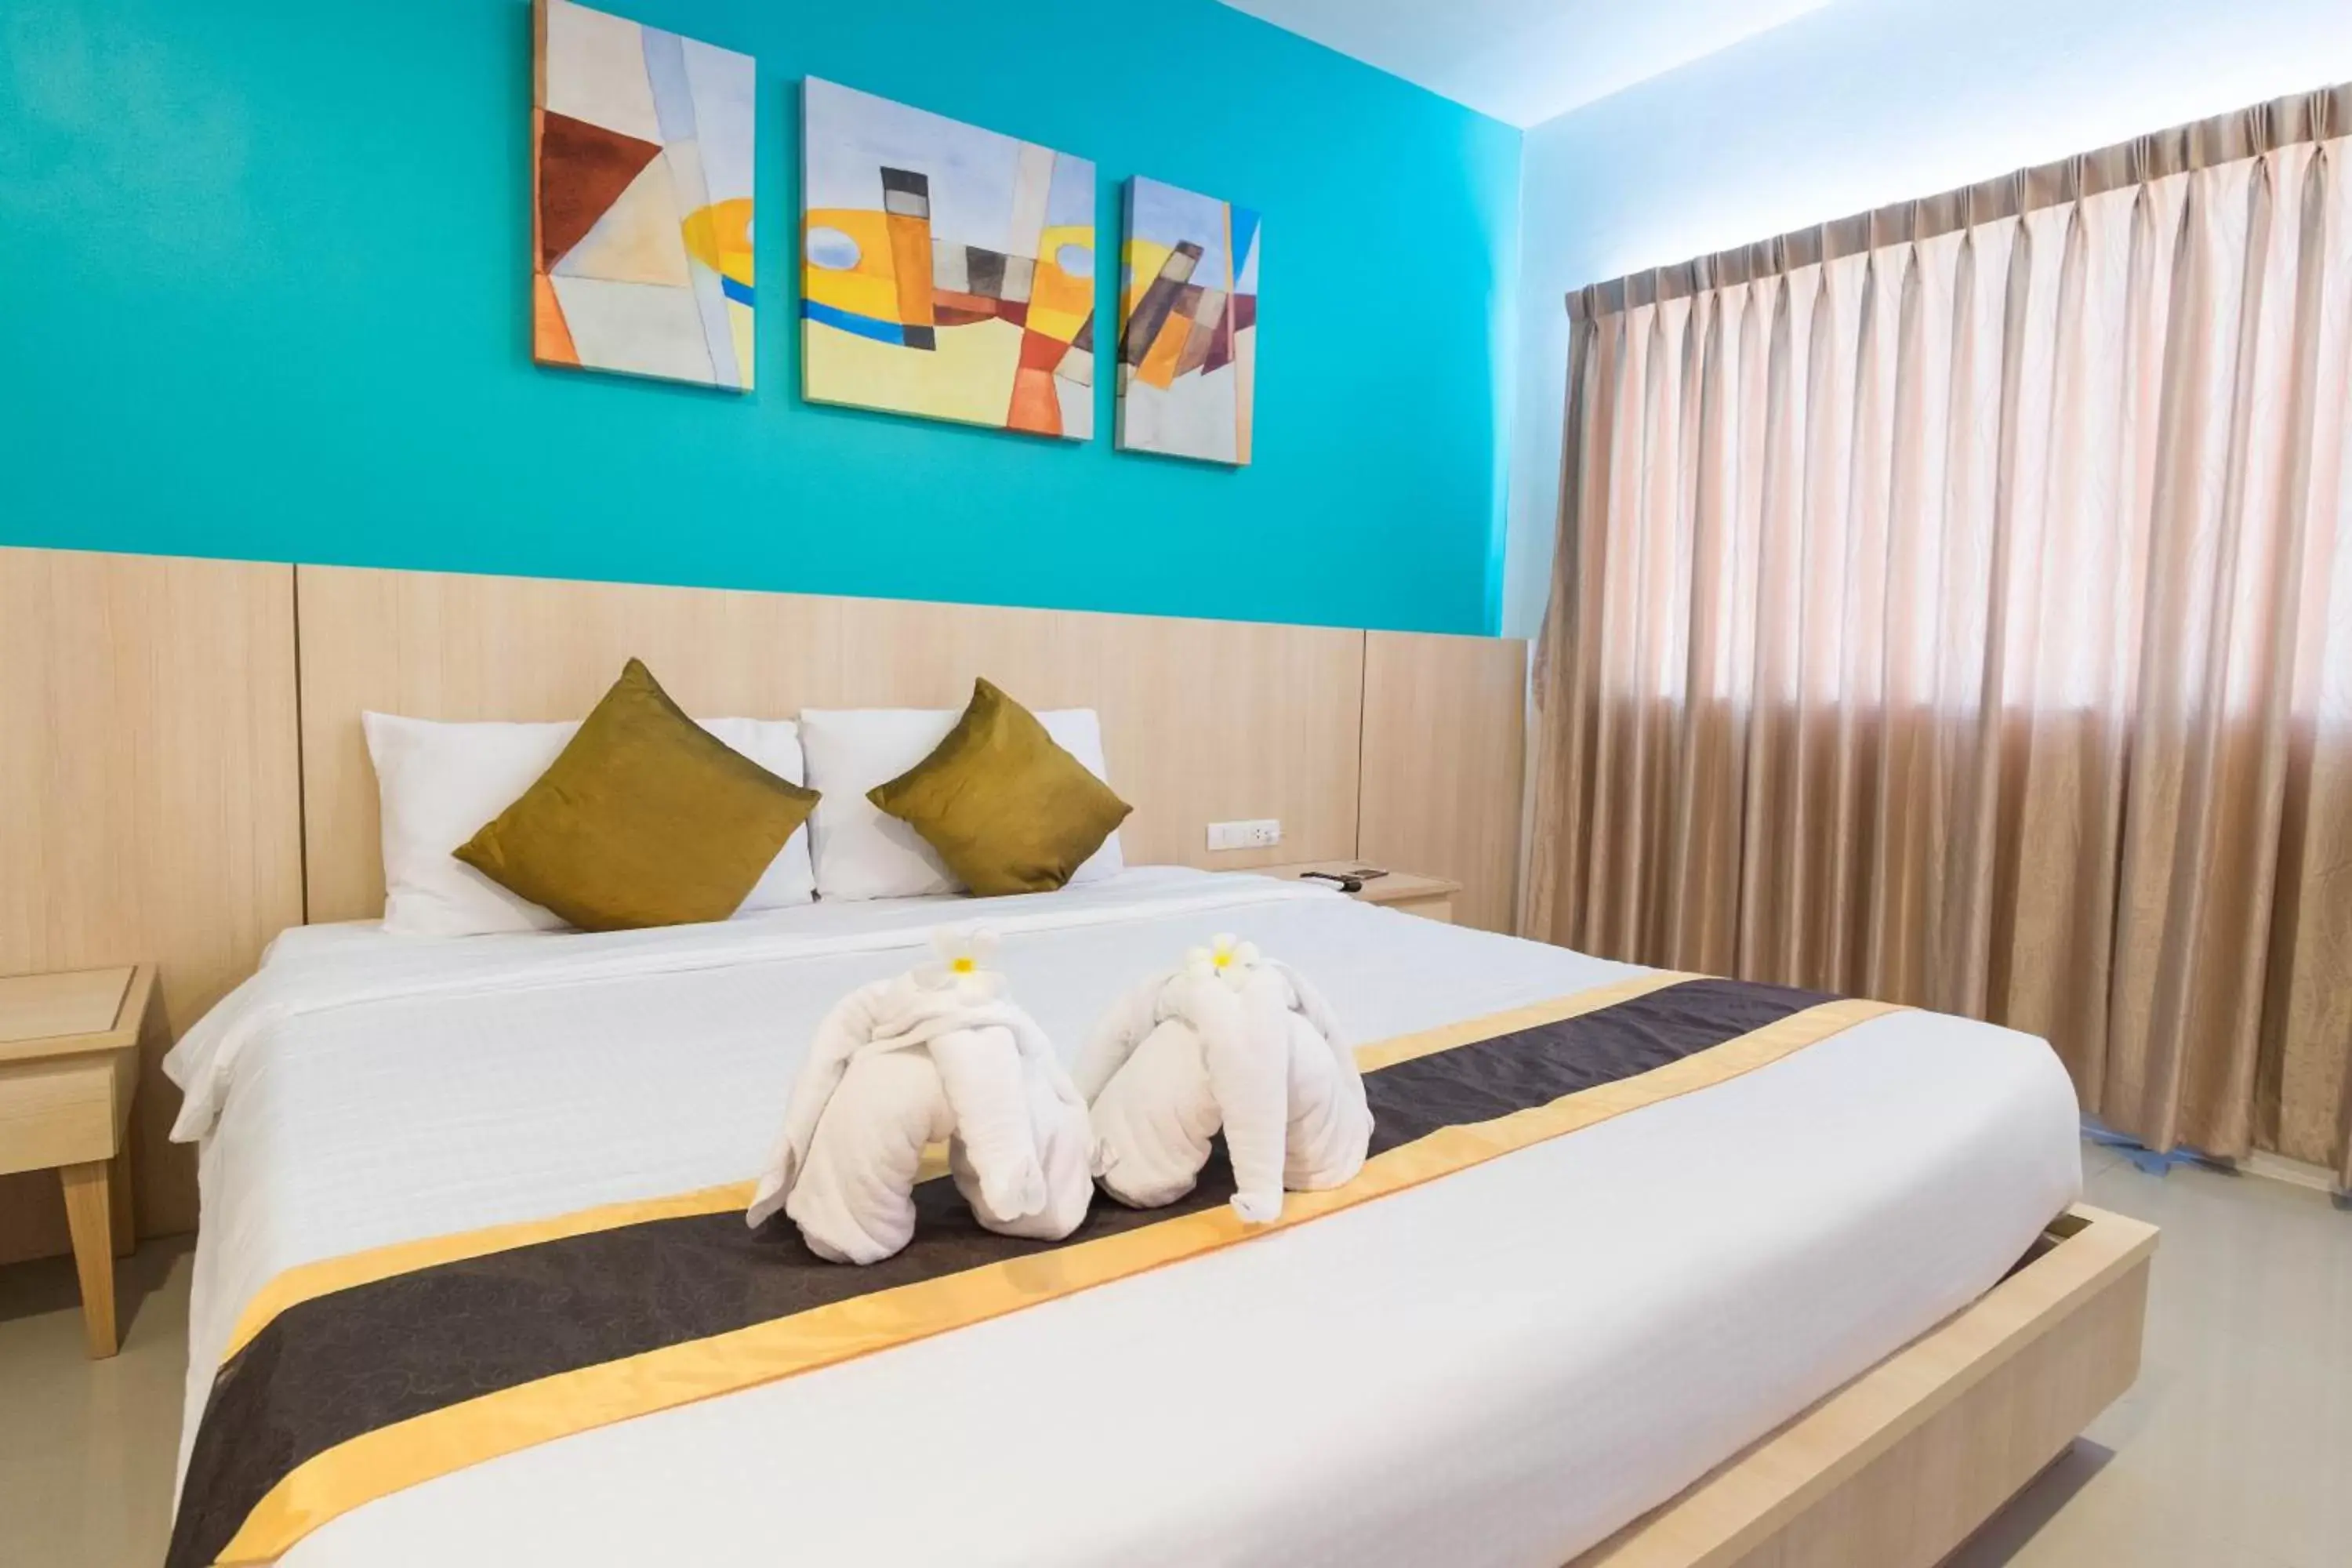 Bedroom, Room Photo in FX Hotel Pattaya